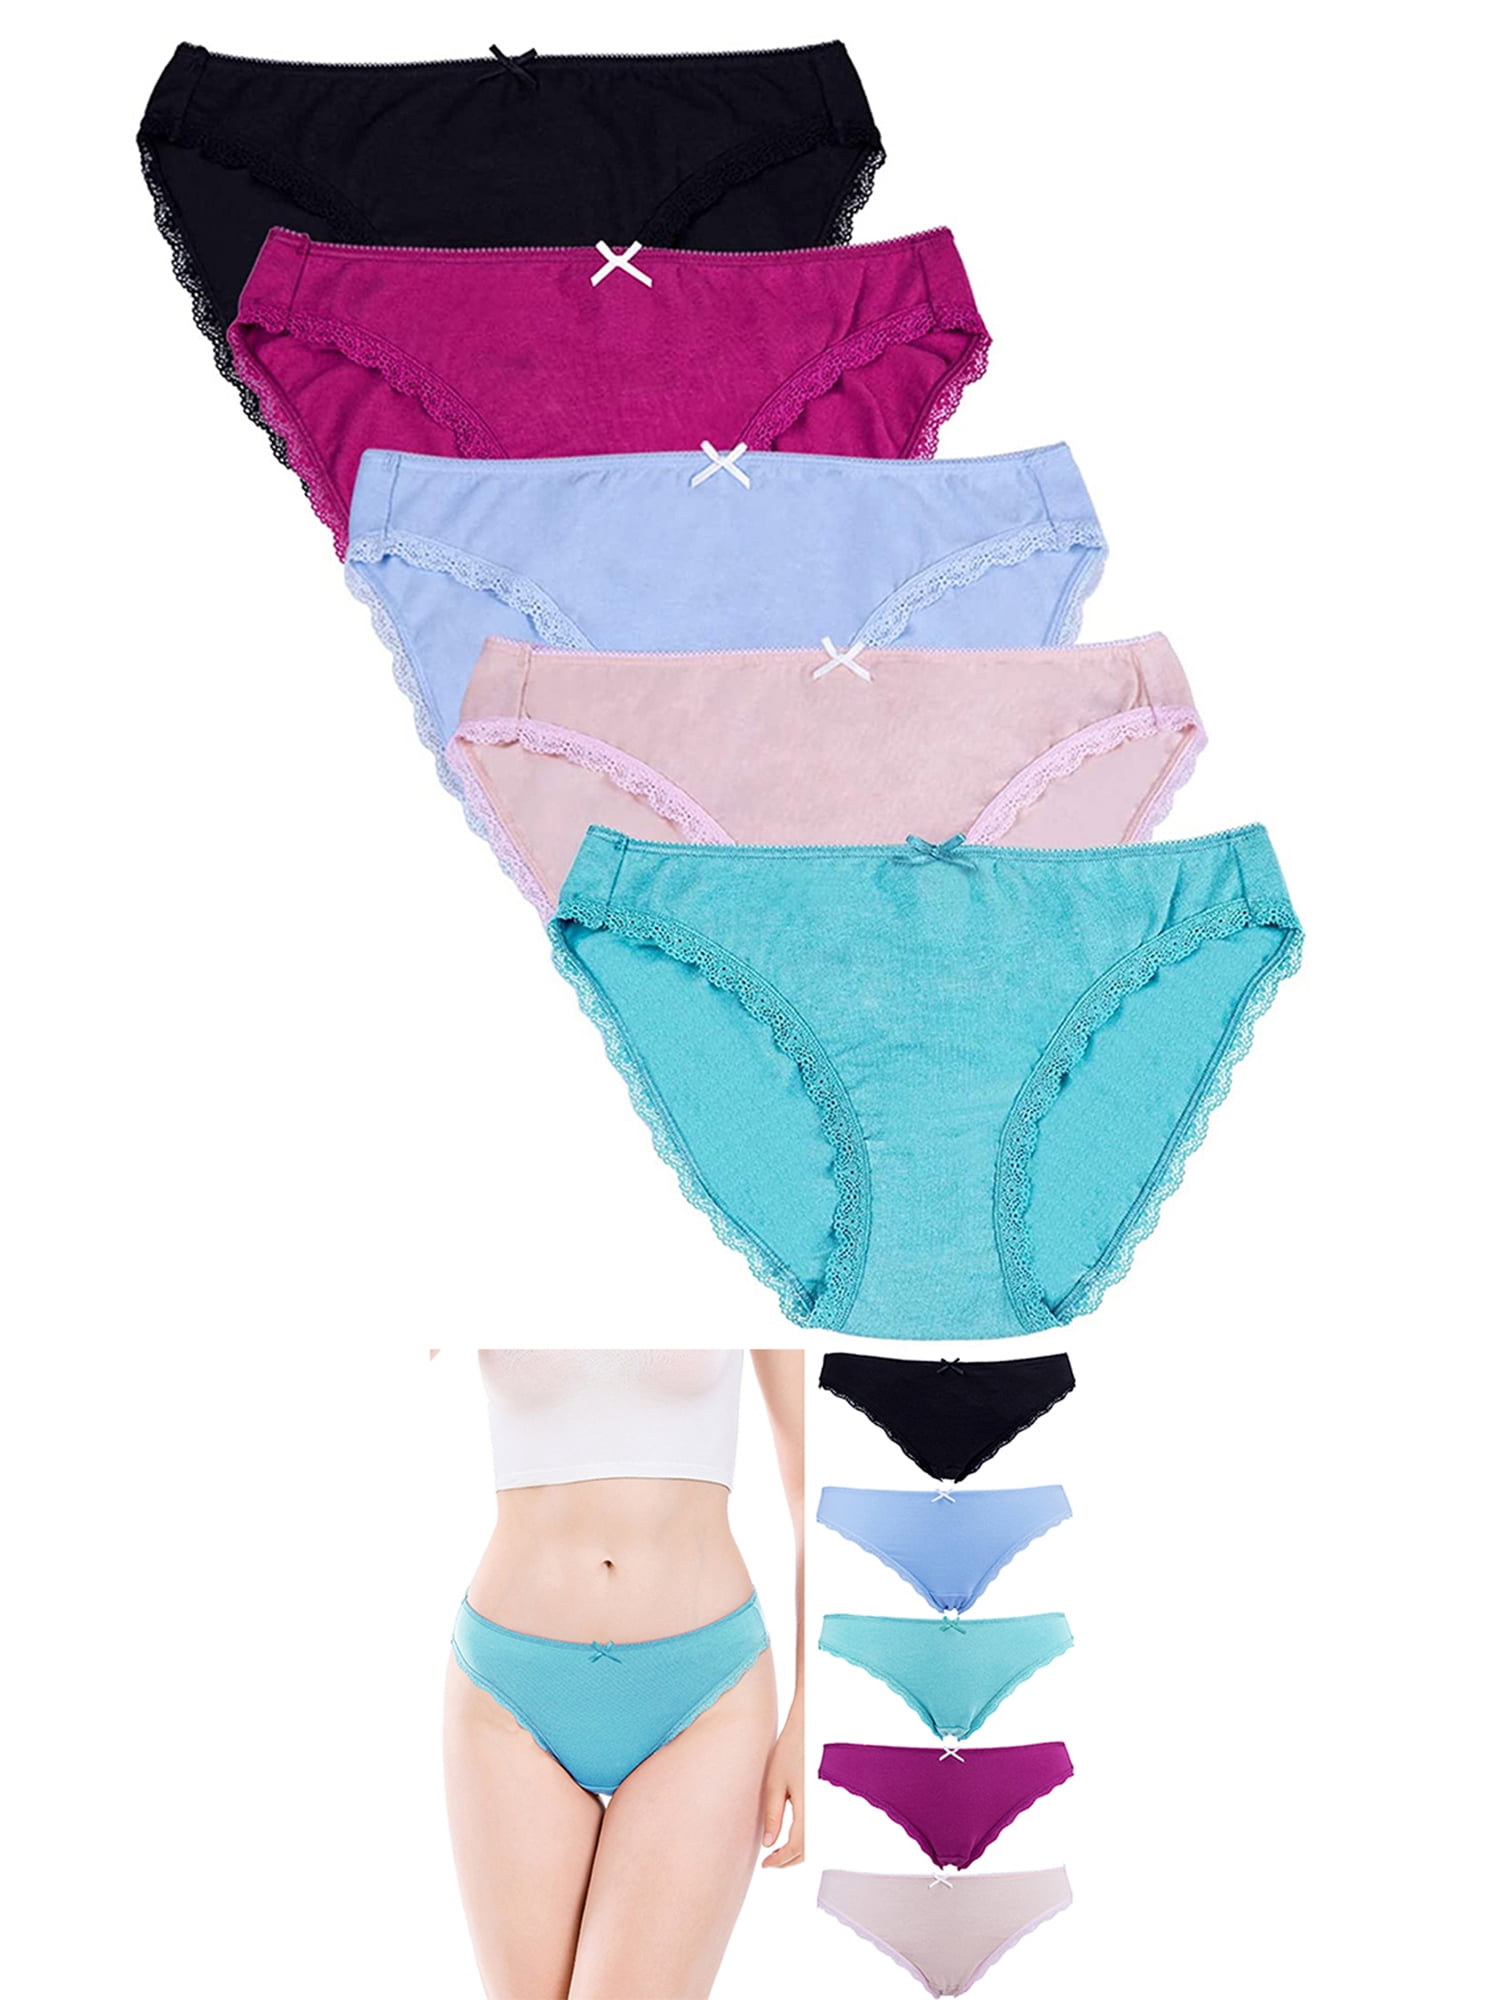 LOT NICE !!5 Women Bikini Panties Brief Floral Lace Cotton Underwear Size M  L XL, F130, M